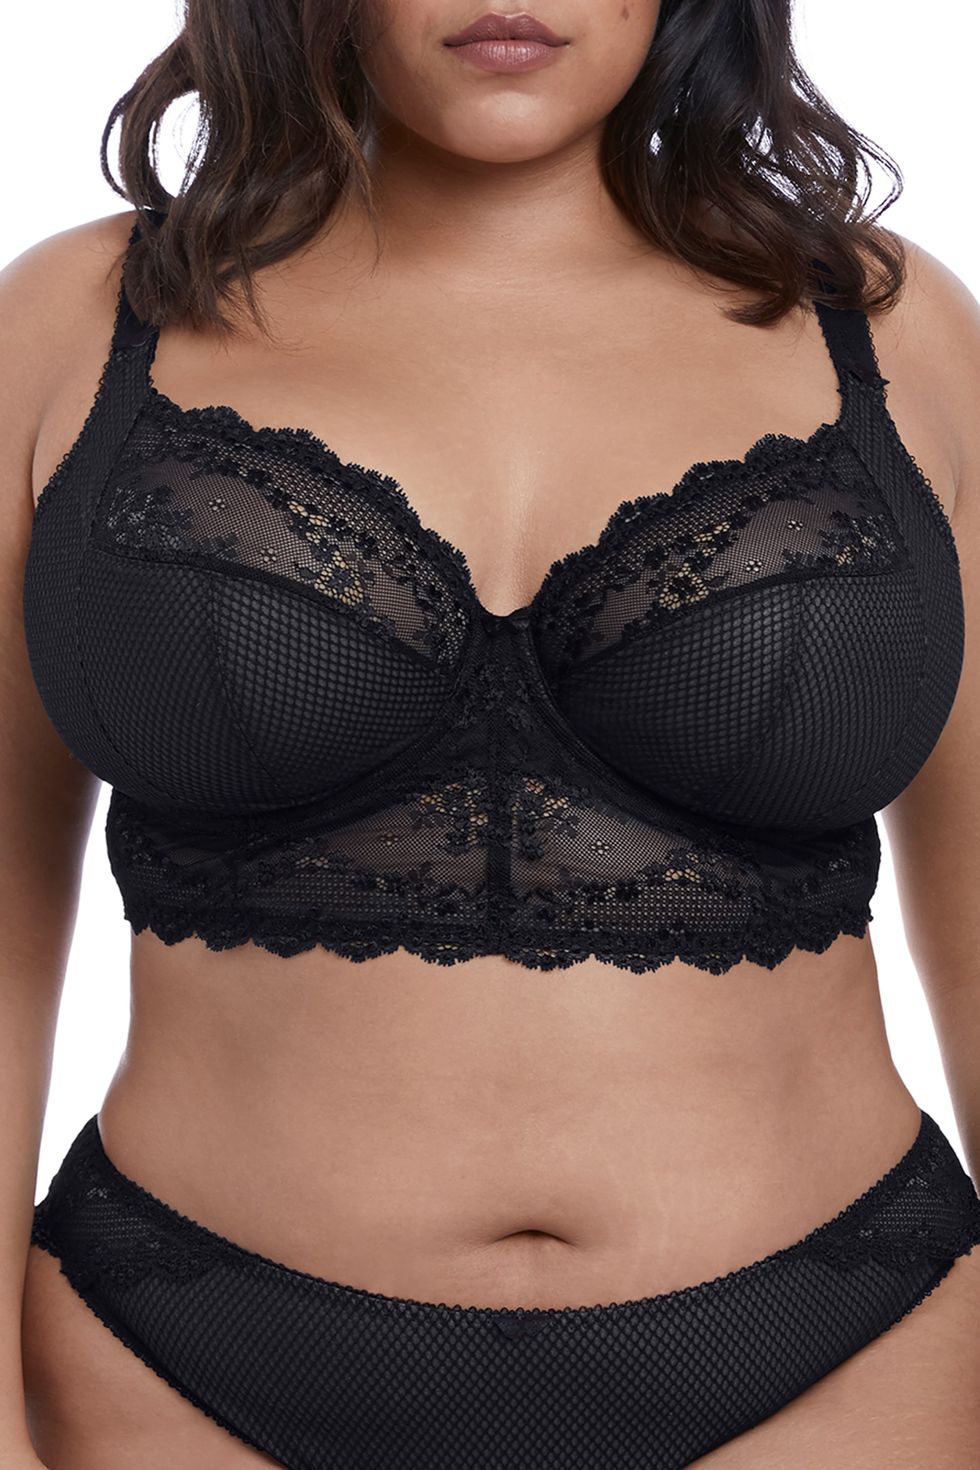 Plus Size Bras For Women Semi-hollow Sexy Lingerie Big Breast